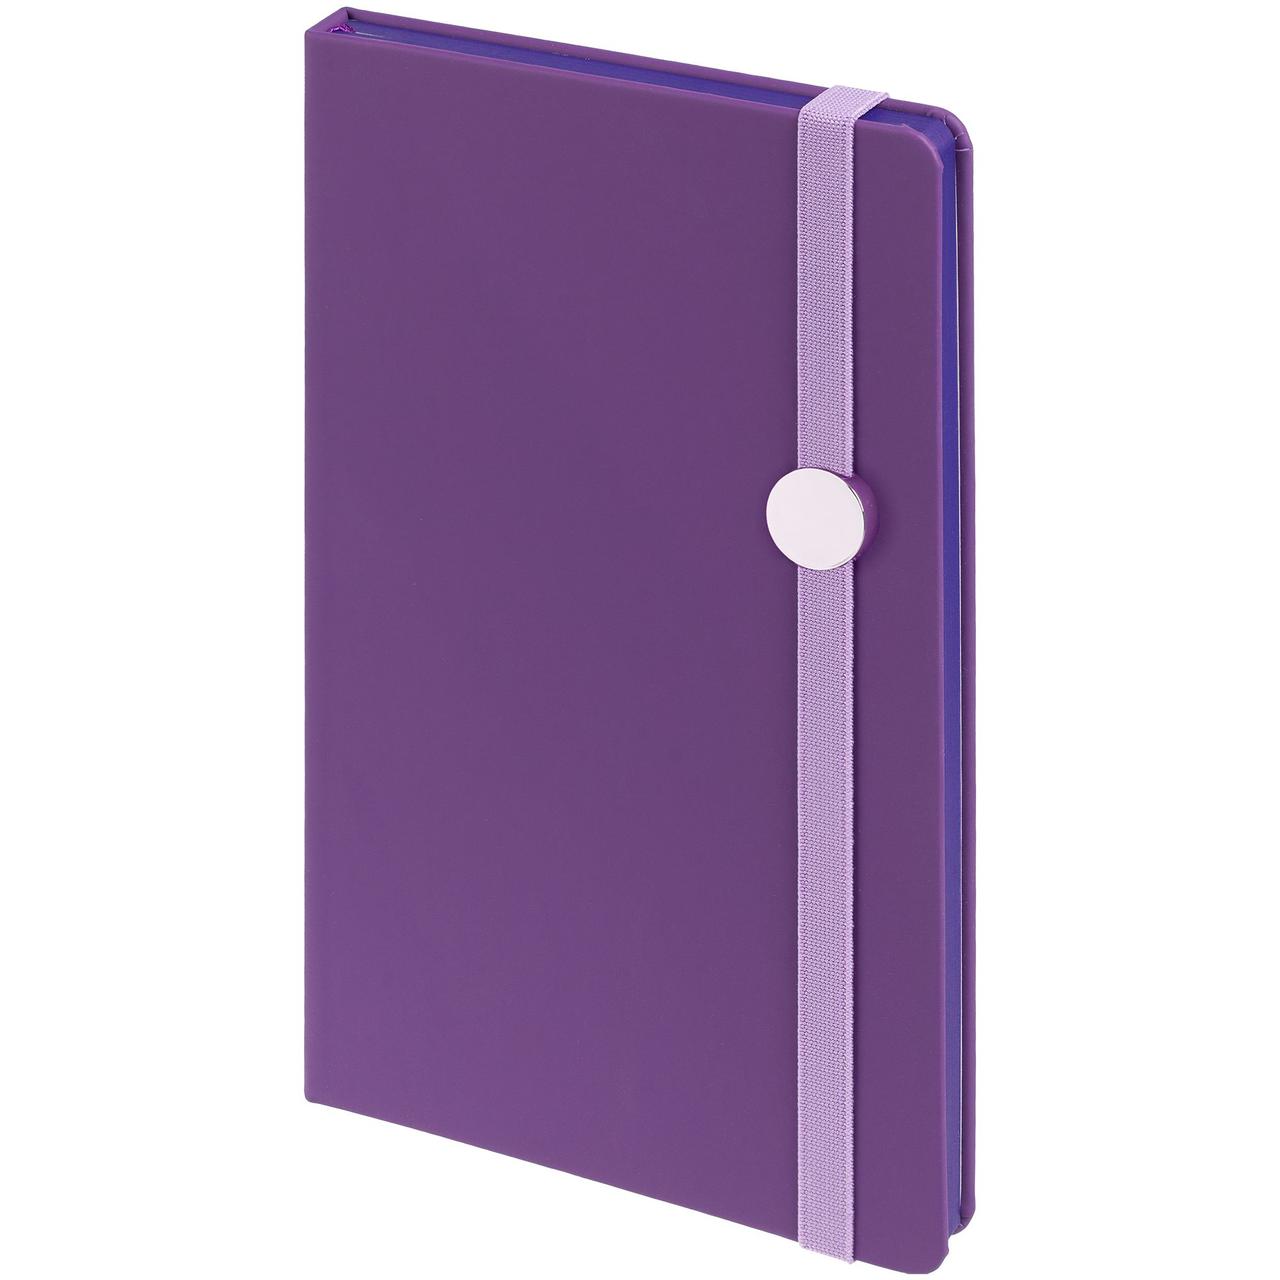 Блокнот Shall Round, фиолетовый (артикул 11882.70), фото 1